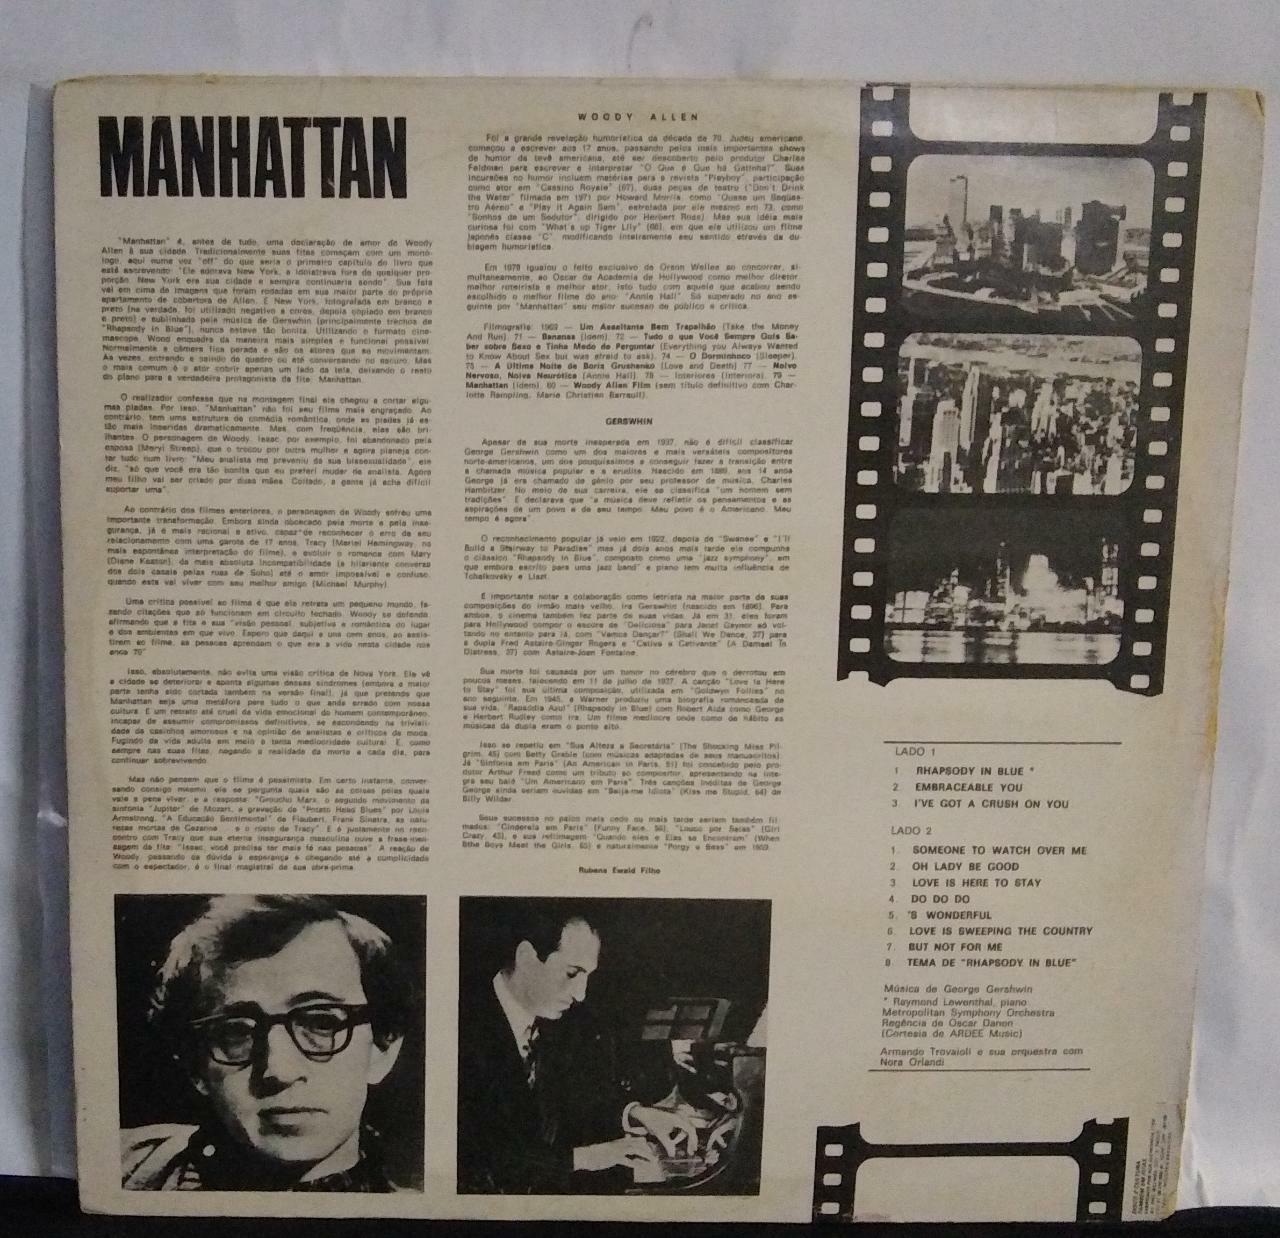 Vinil - Manhattan - Música de George Gershin do Filme de Woody Allen